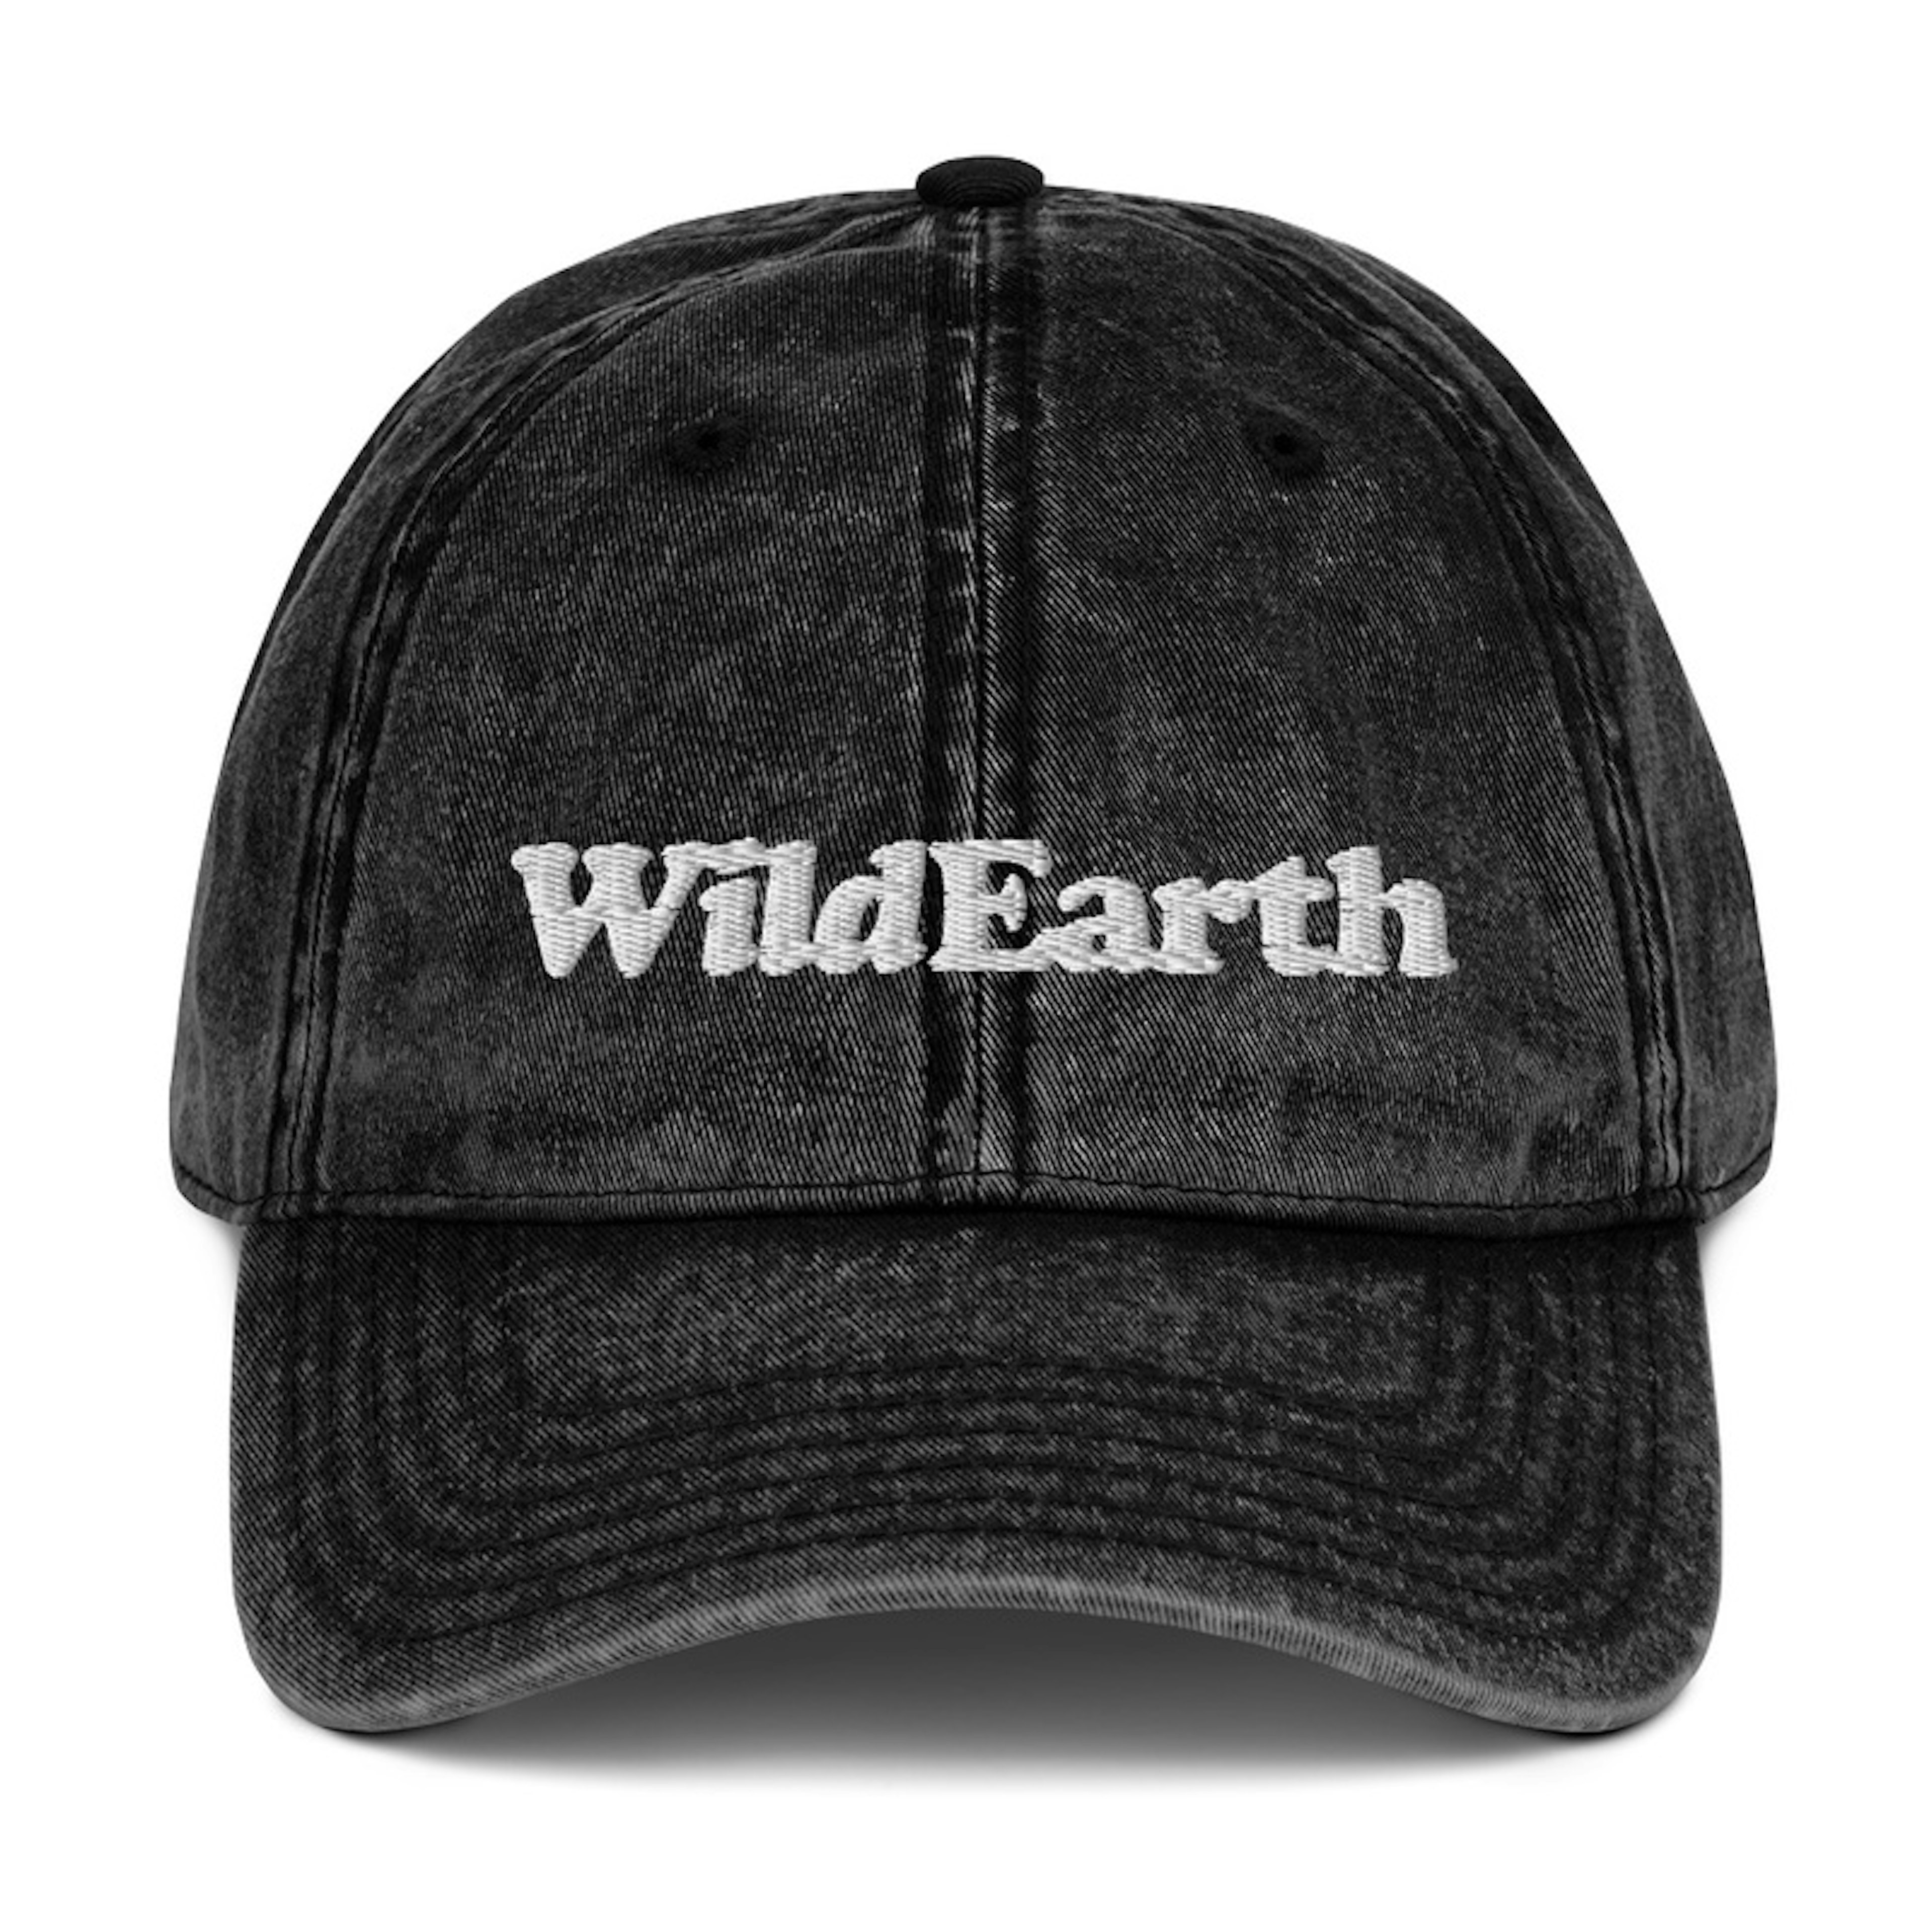 WildEarth Cap 2